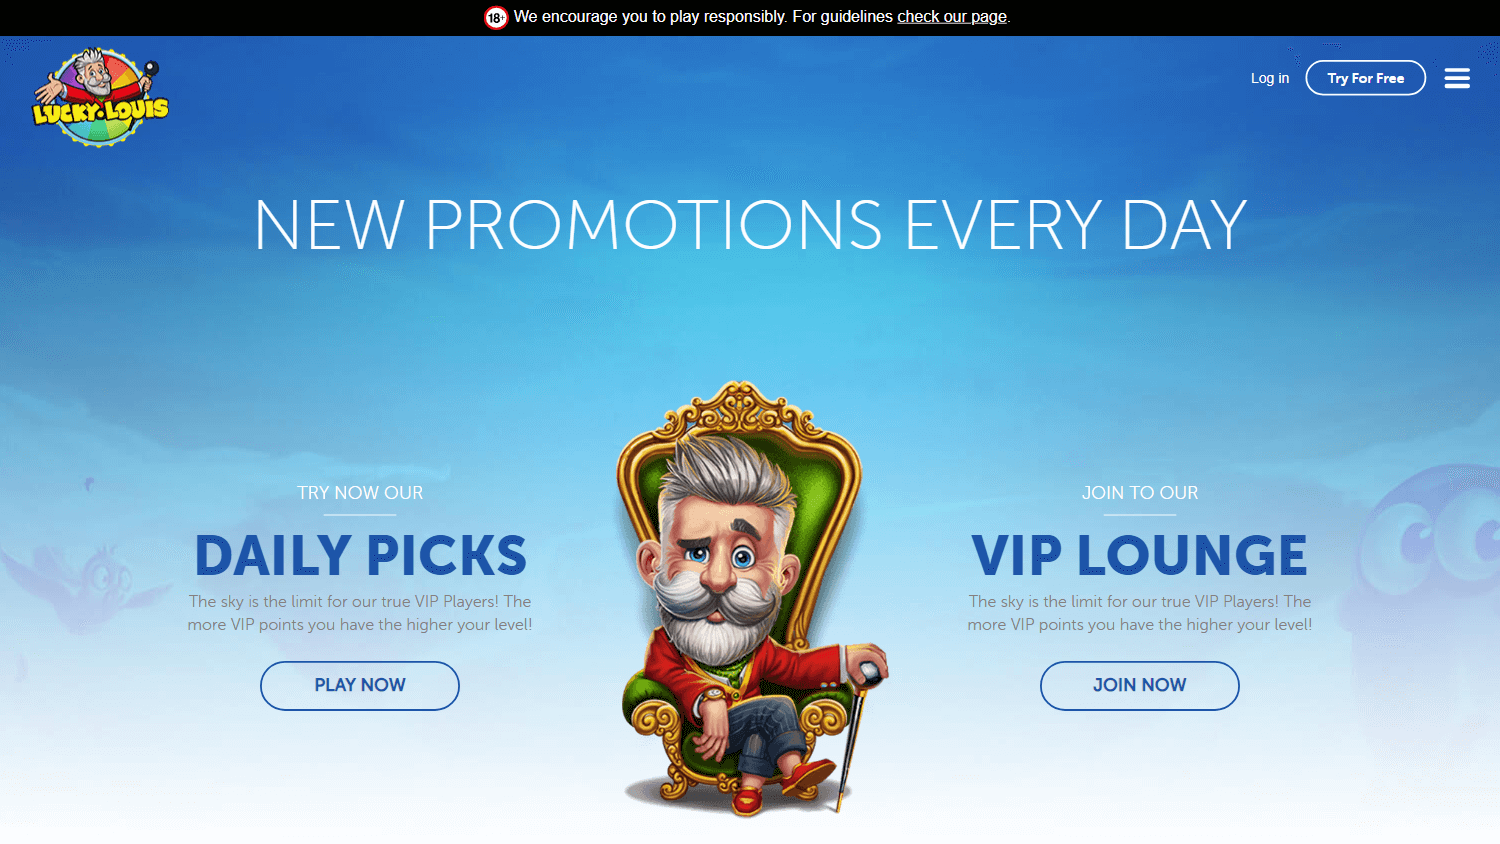 luckylouis_casino_promotions_desktop